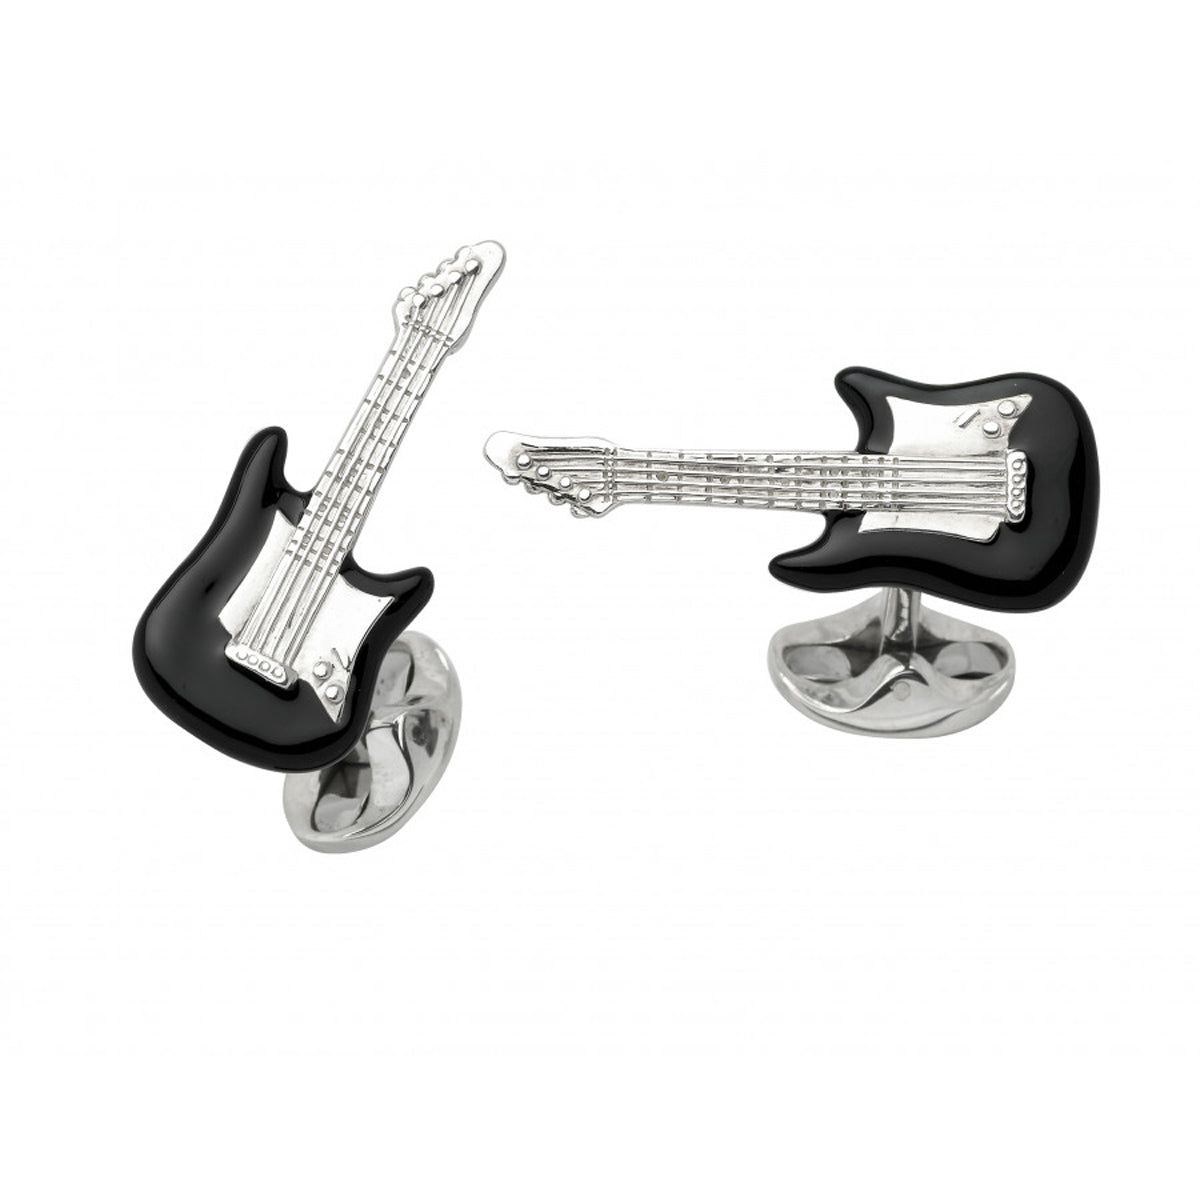 A pair of Sterling Silver Black Guitar Cufflinks